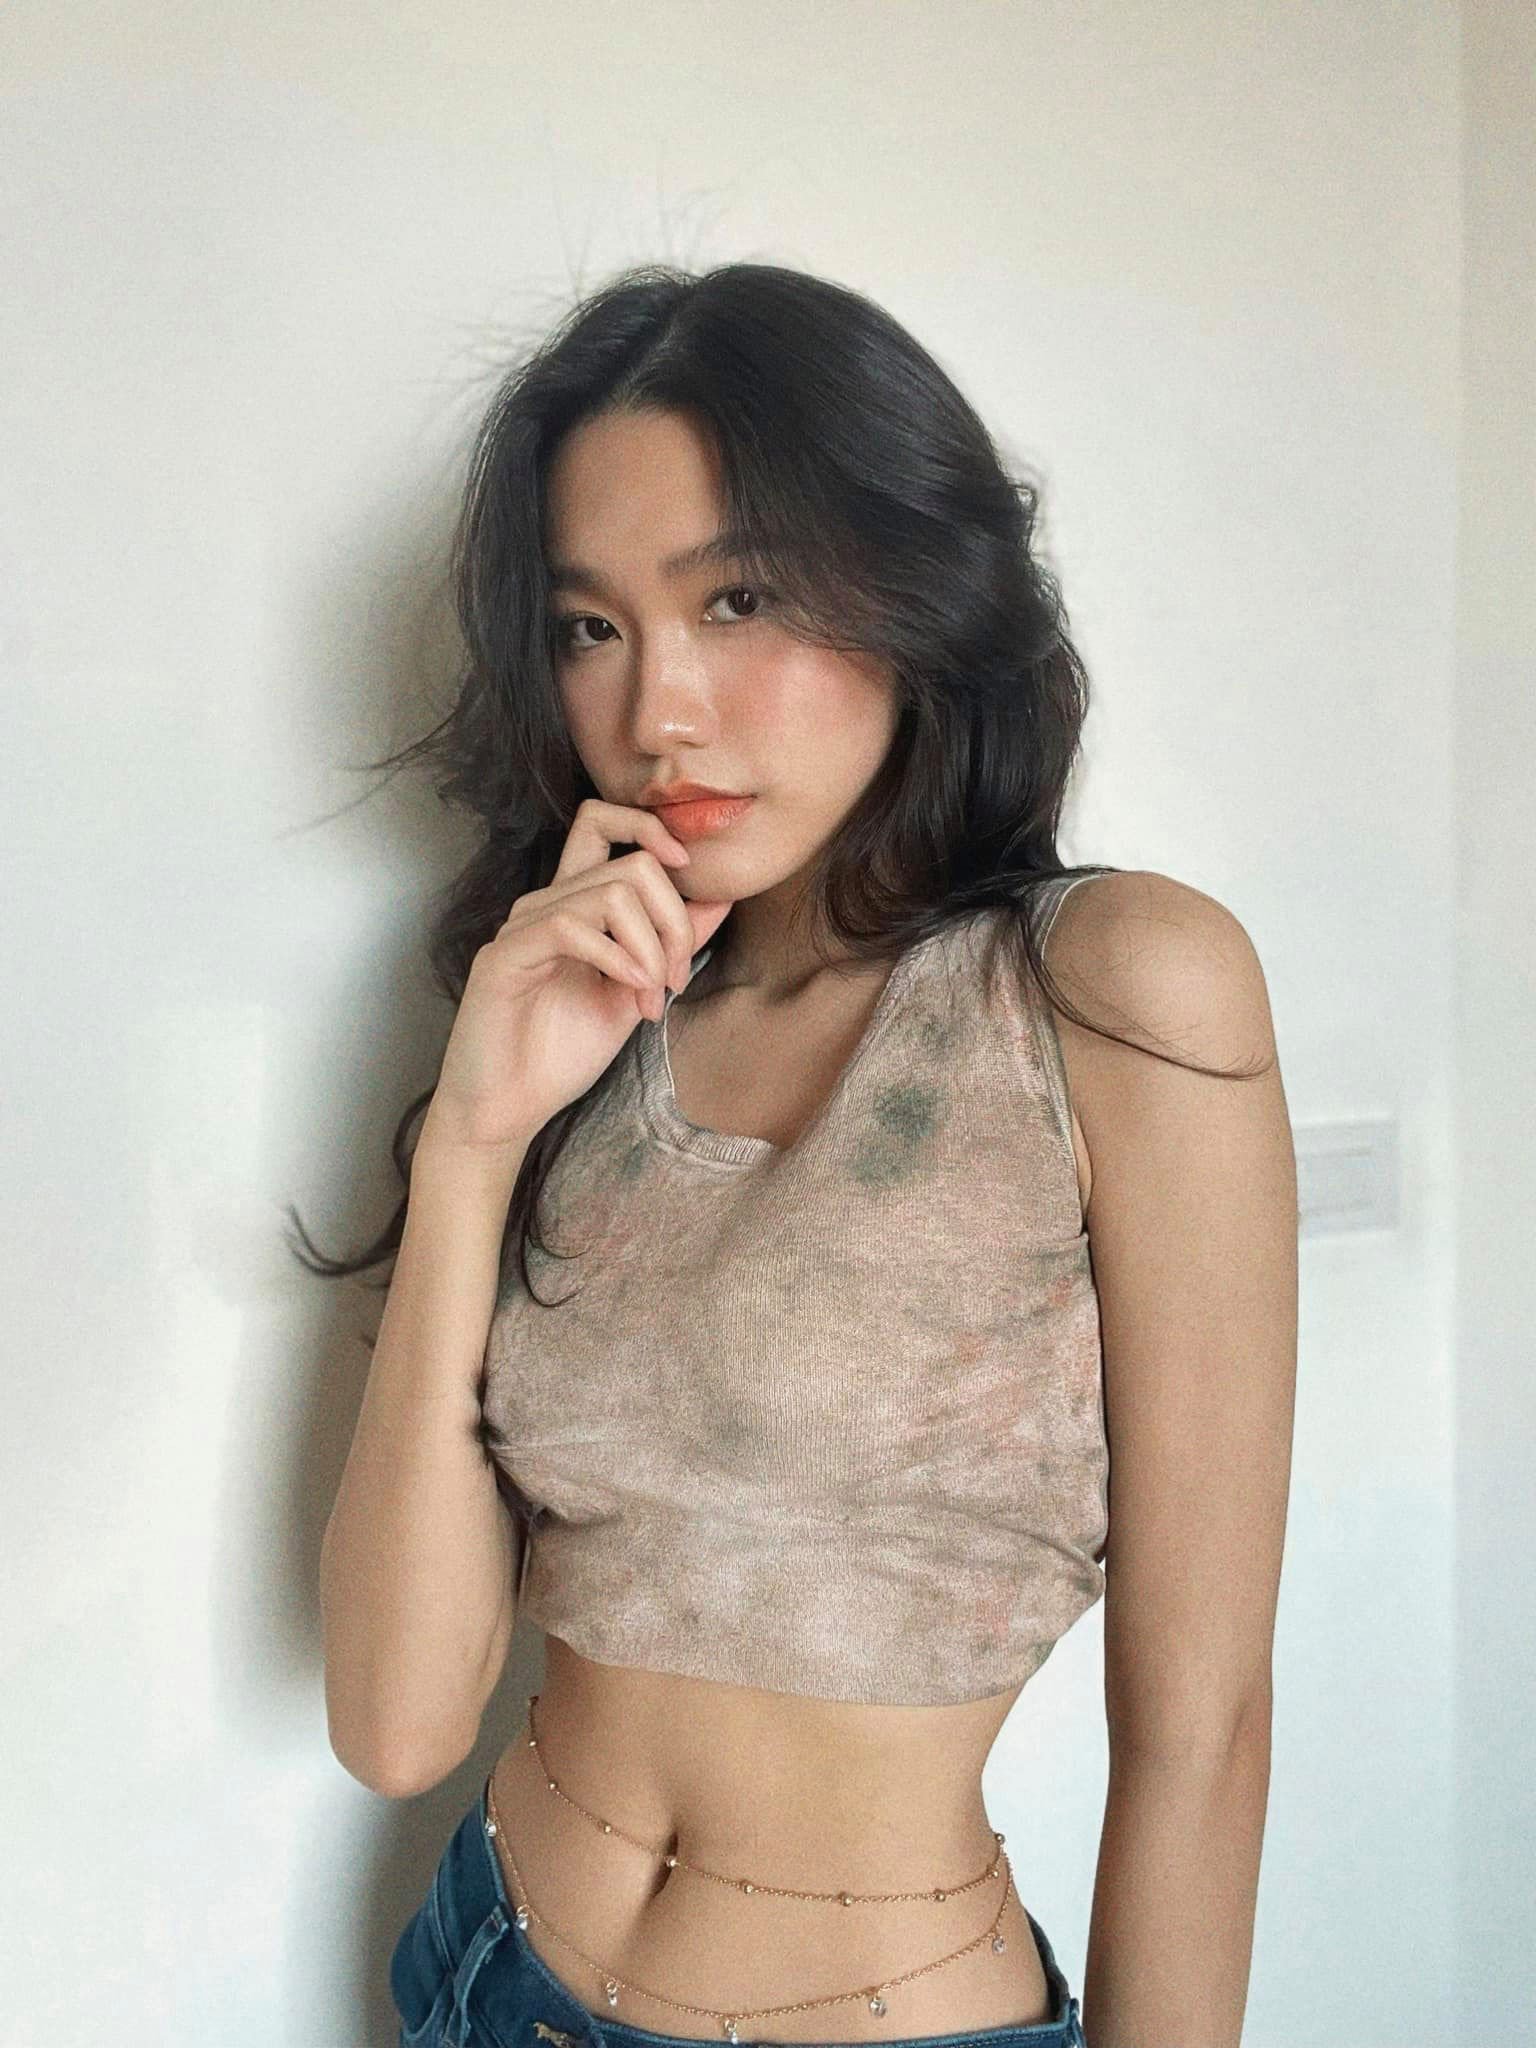 Doan Van Hau's girlfriend shows off the smallest 58cm waist in the Vietnamese beauty village - 9